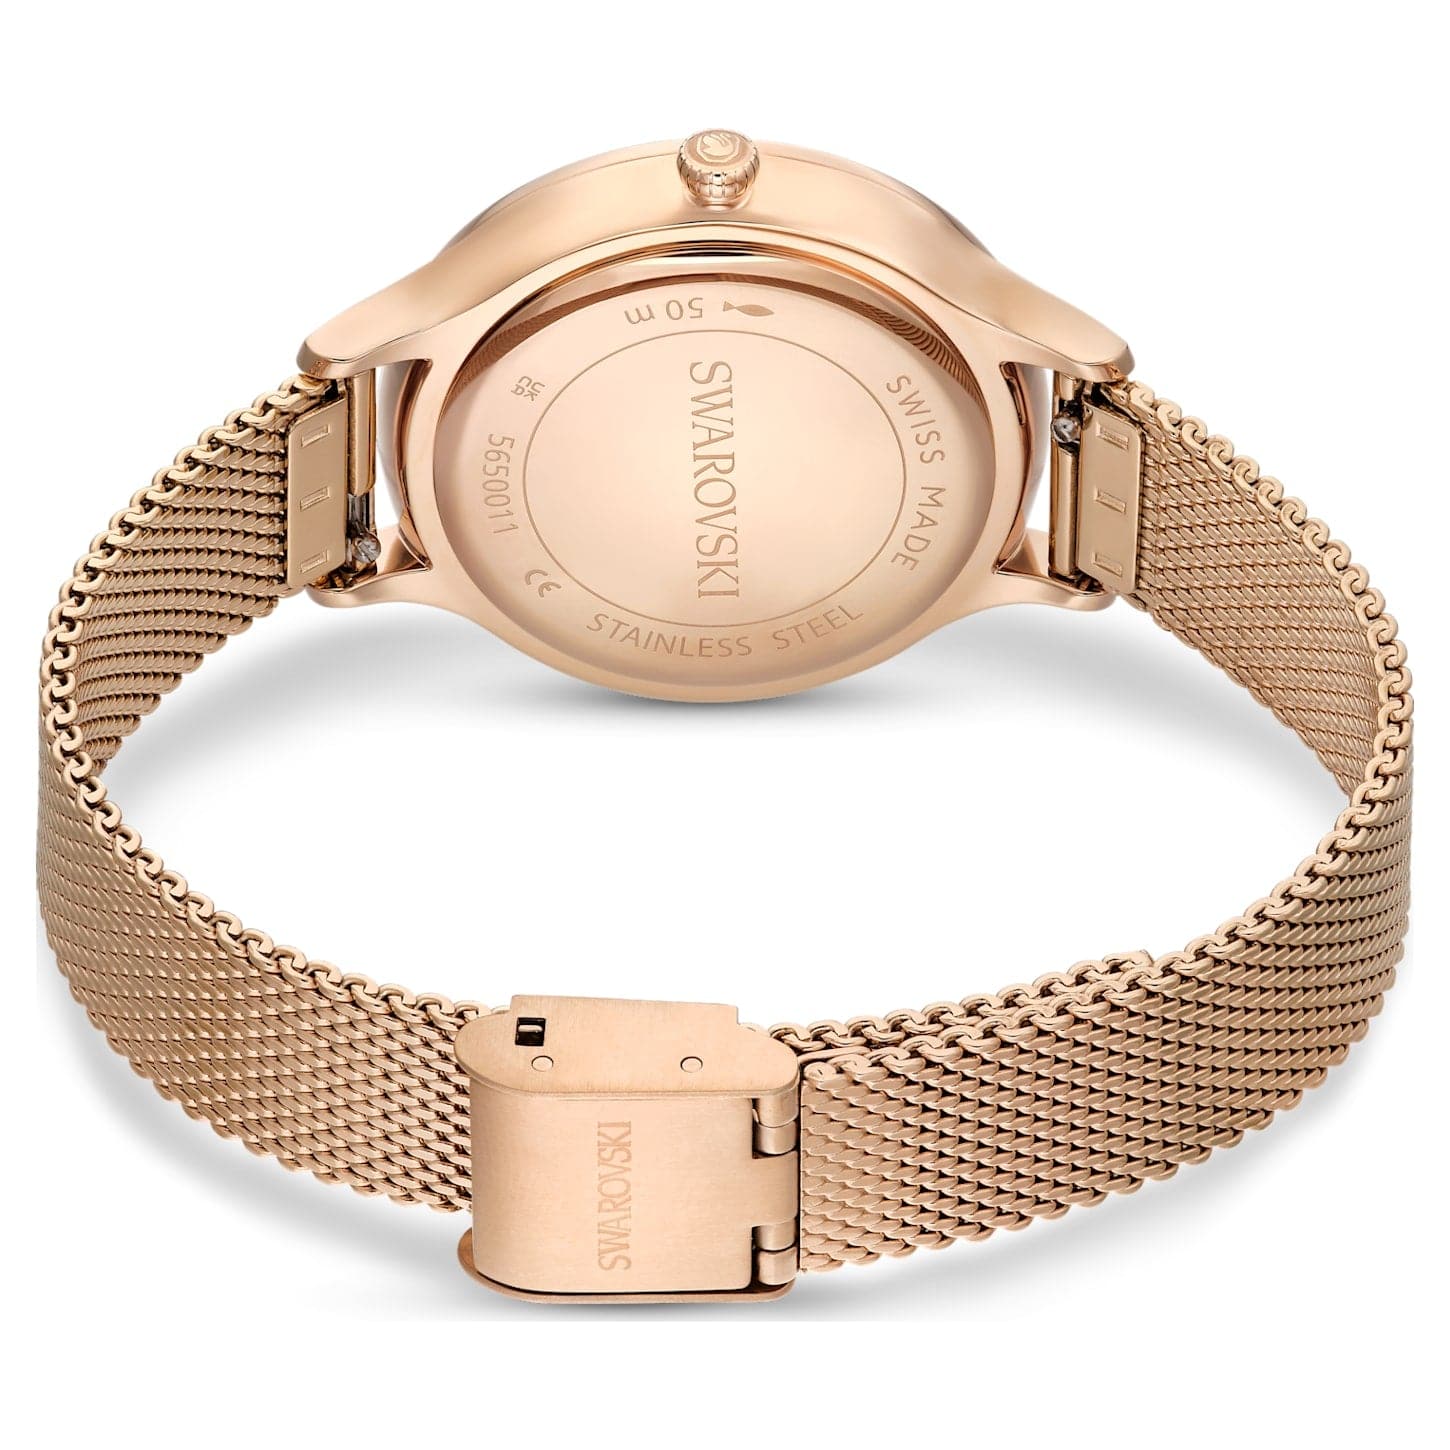 Octea Nova watch Swiss Made, Metal bracelet, Rose gold tone, Rose gold-tone finish - Kamal Watch Company